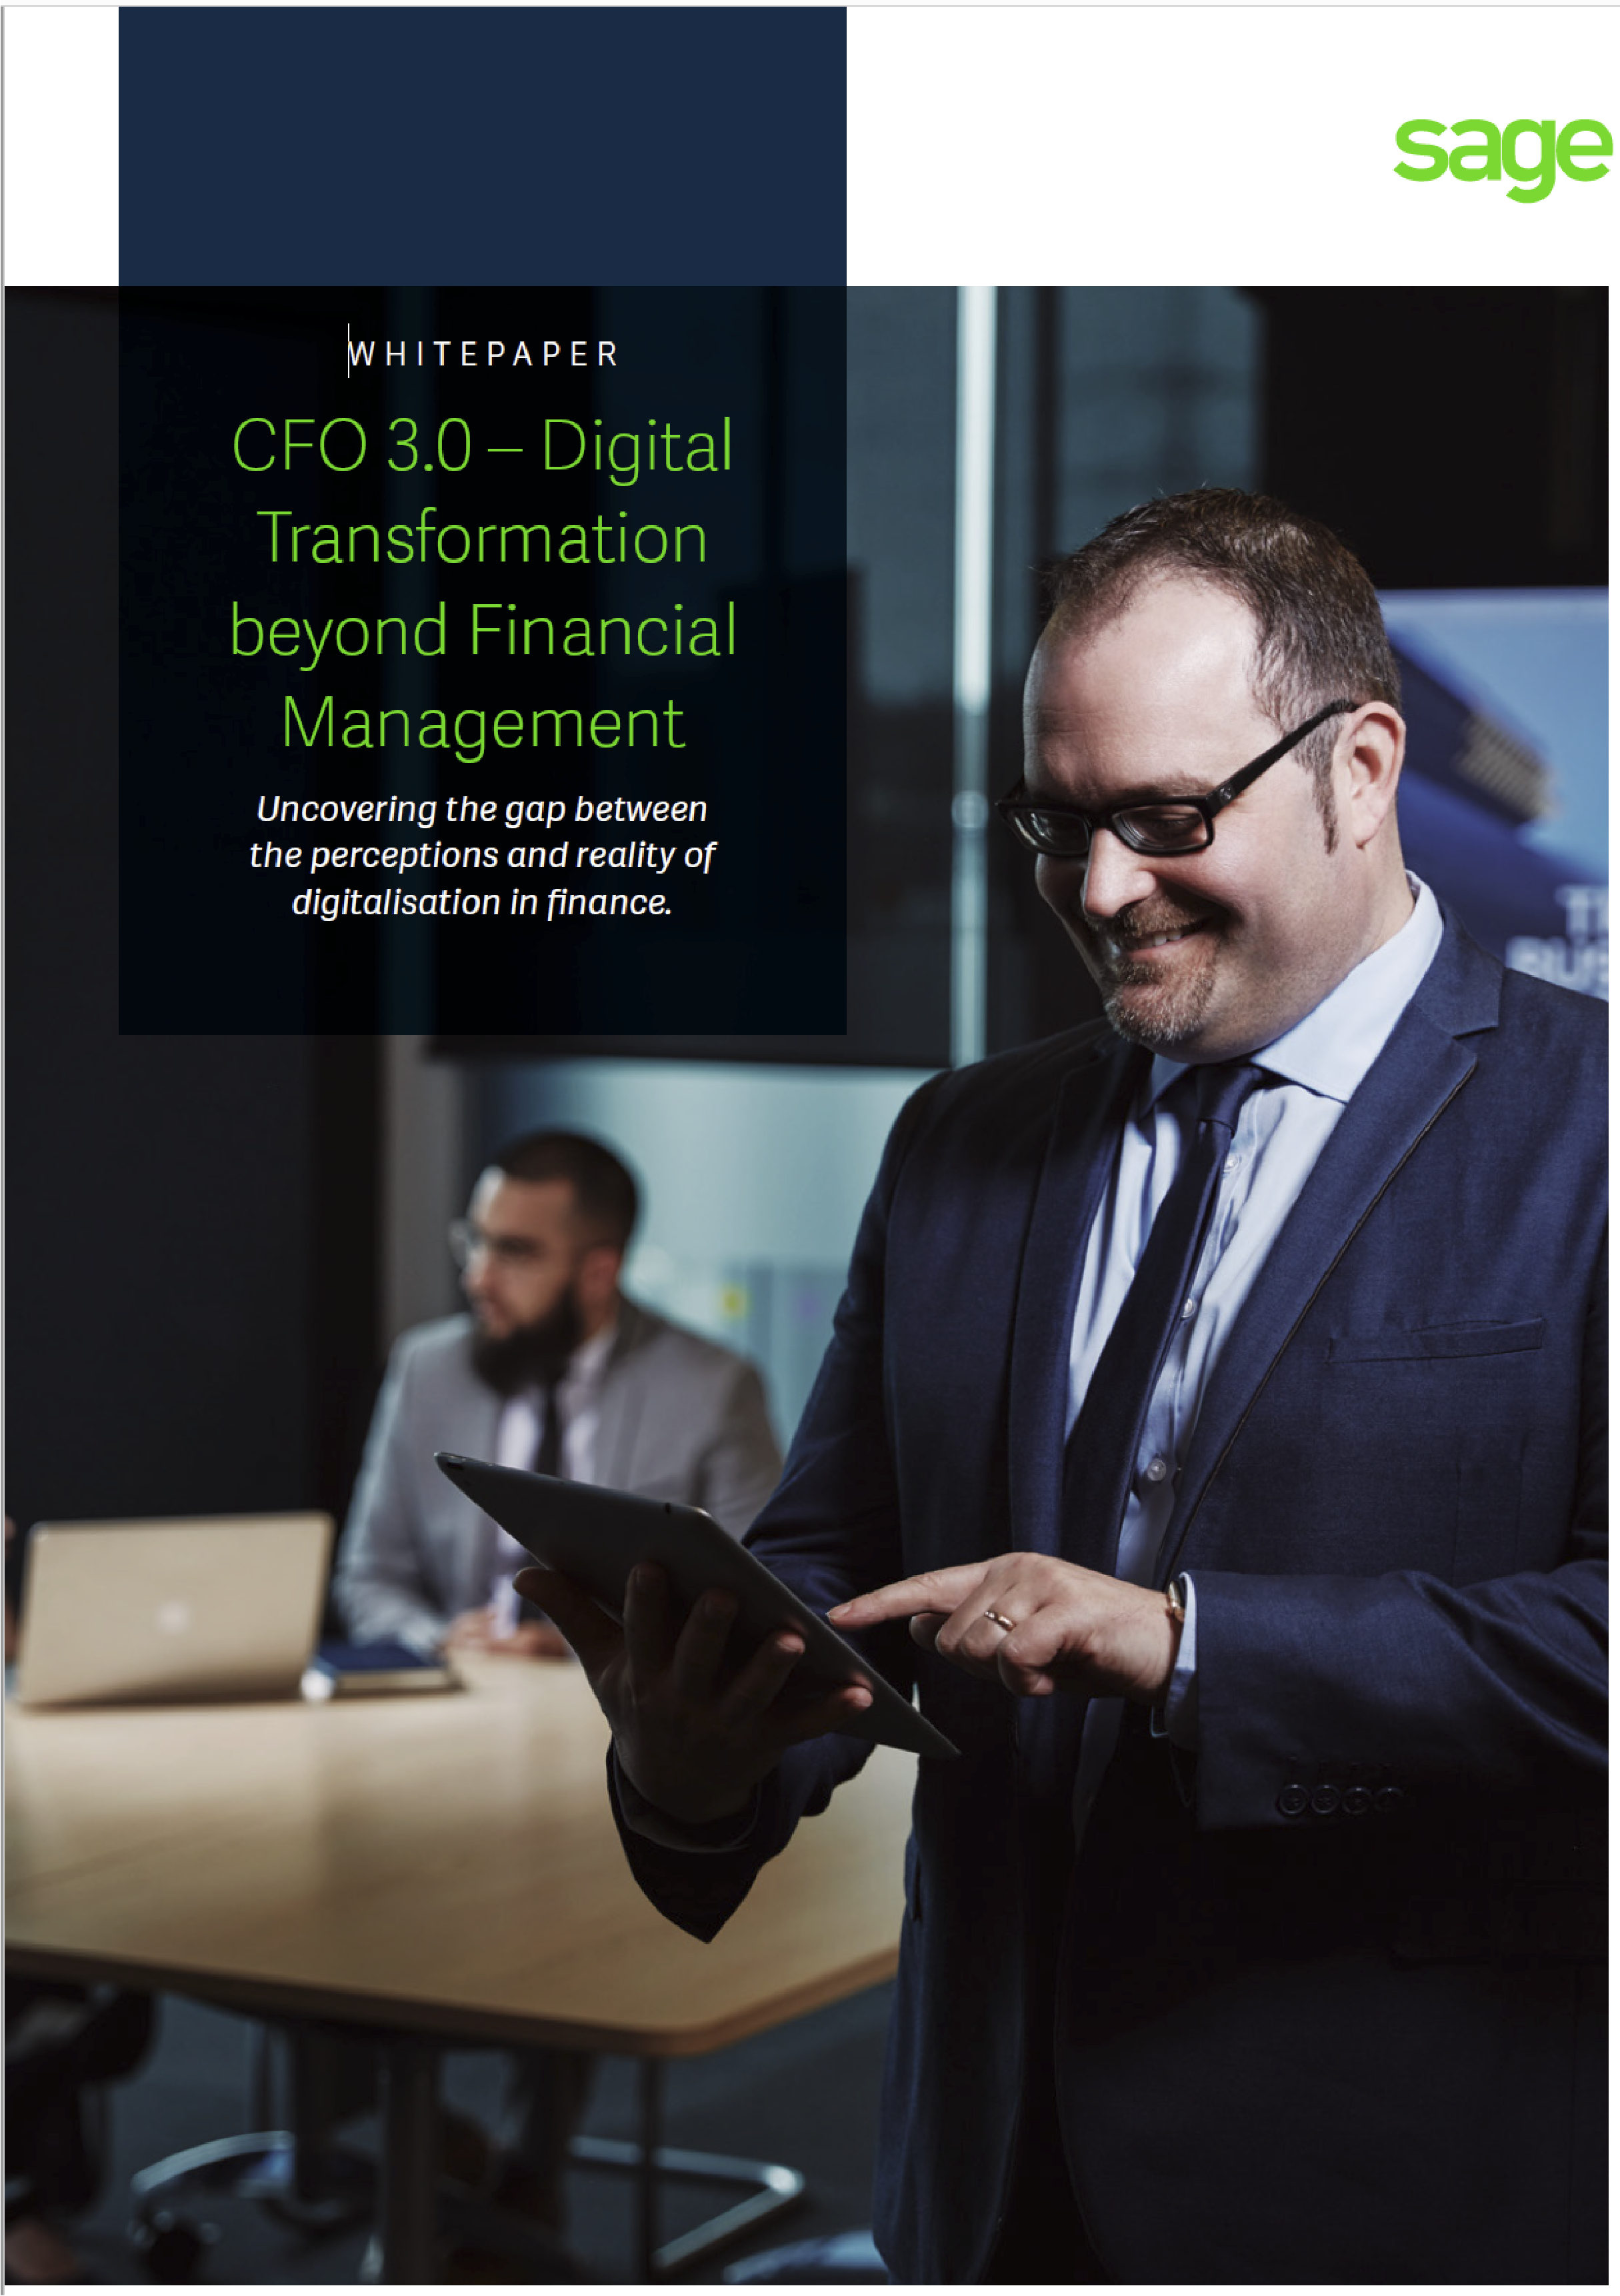 CFO 3.0 – Digital Transformation beyond Financial Management